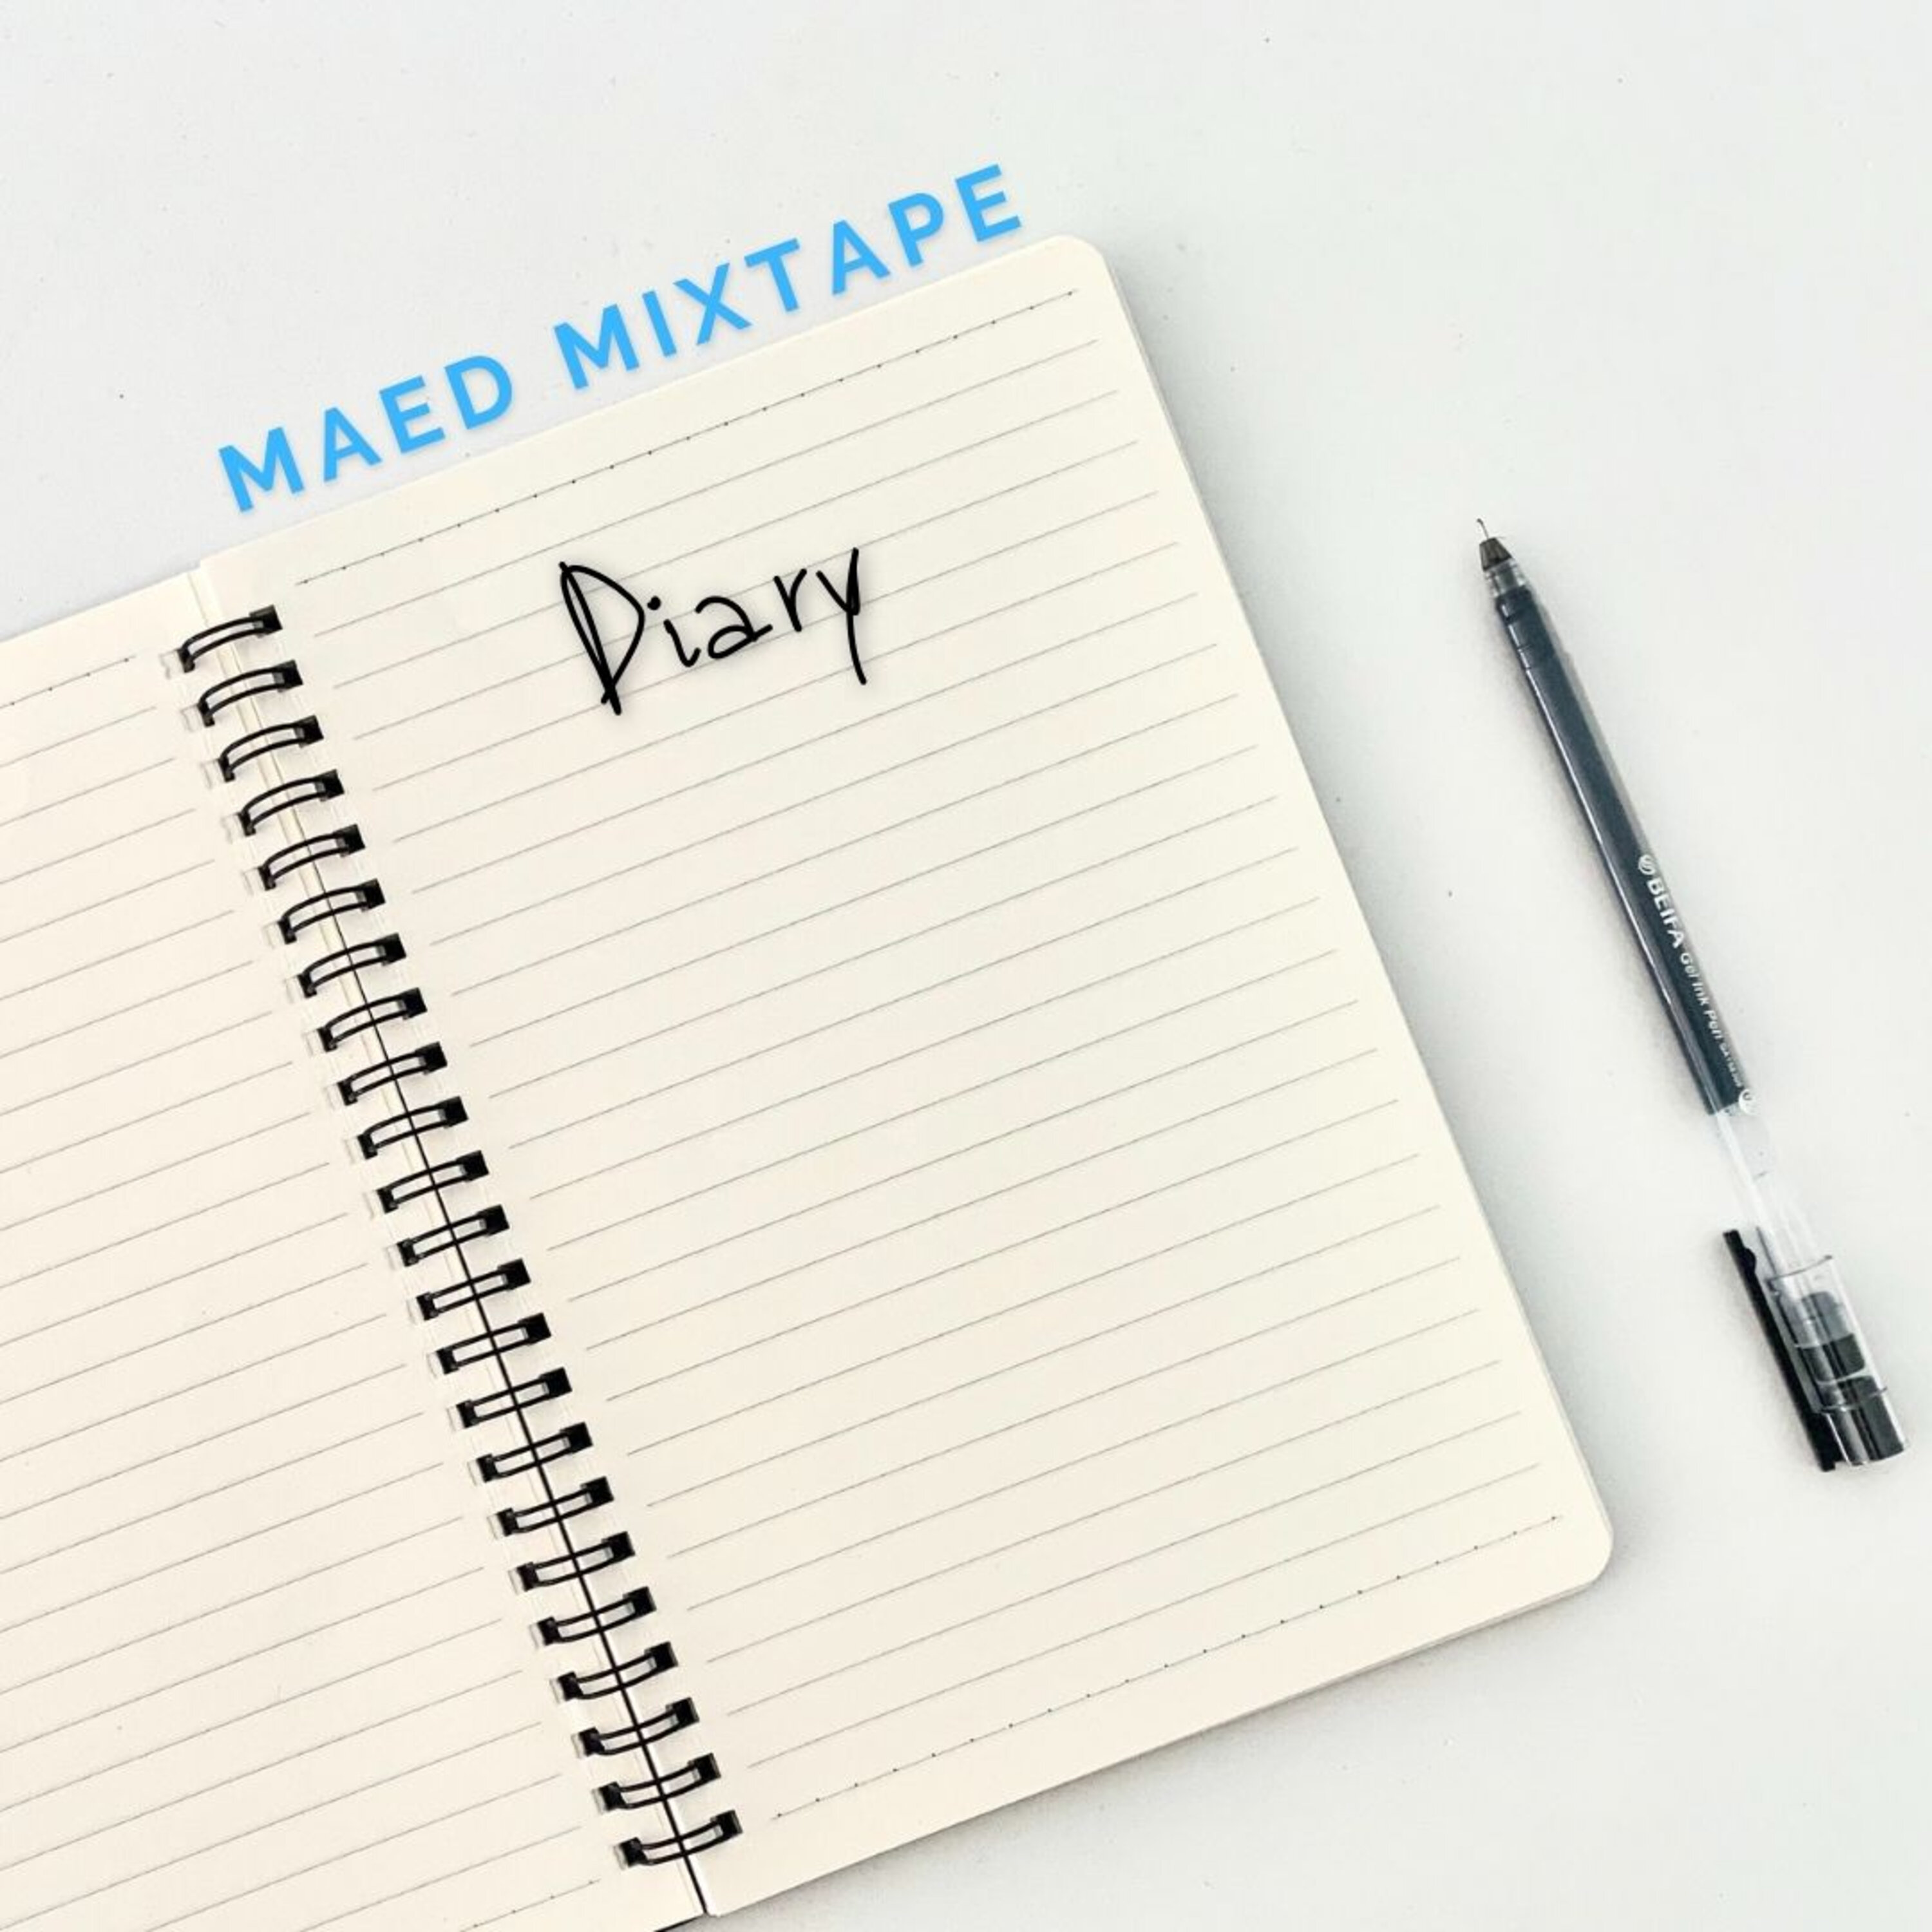 Maed Mixtape - Diary